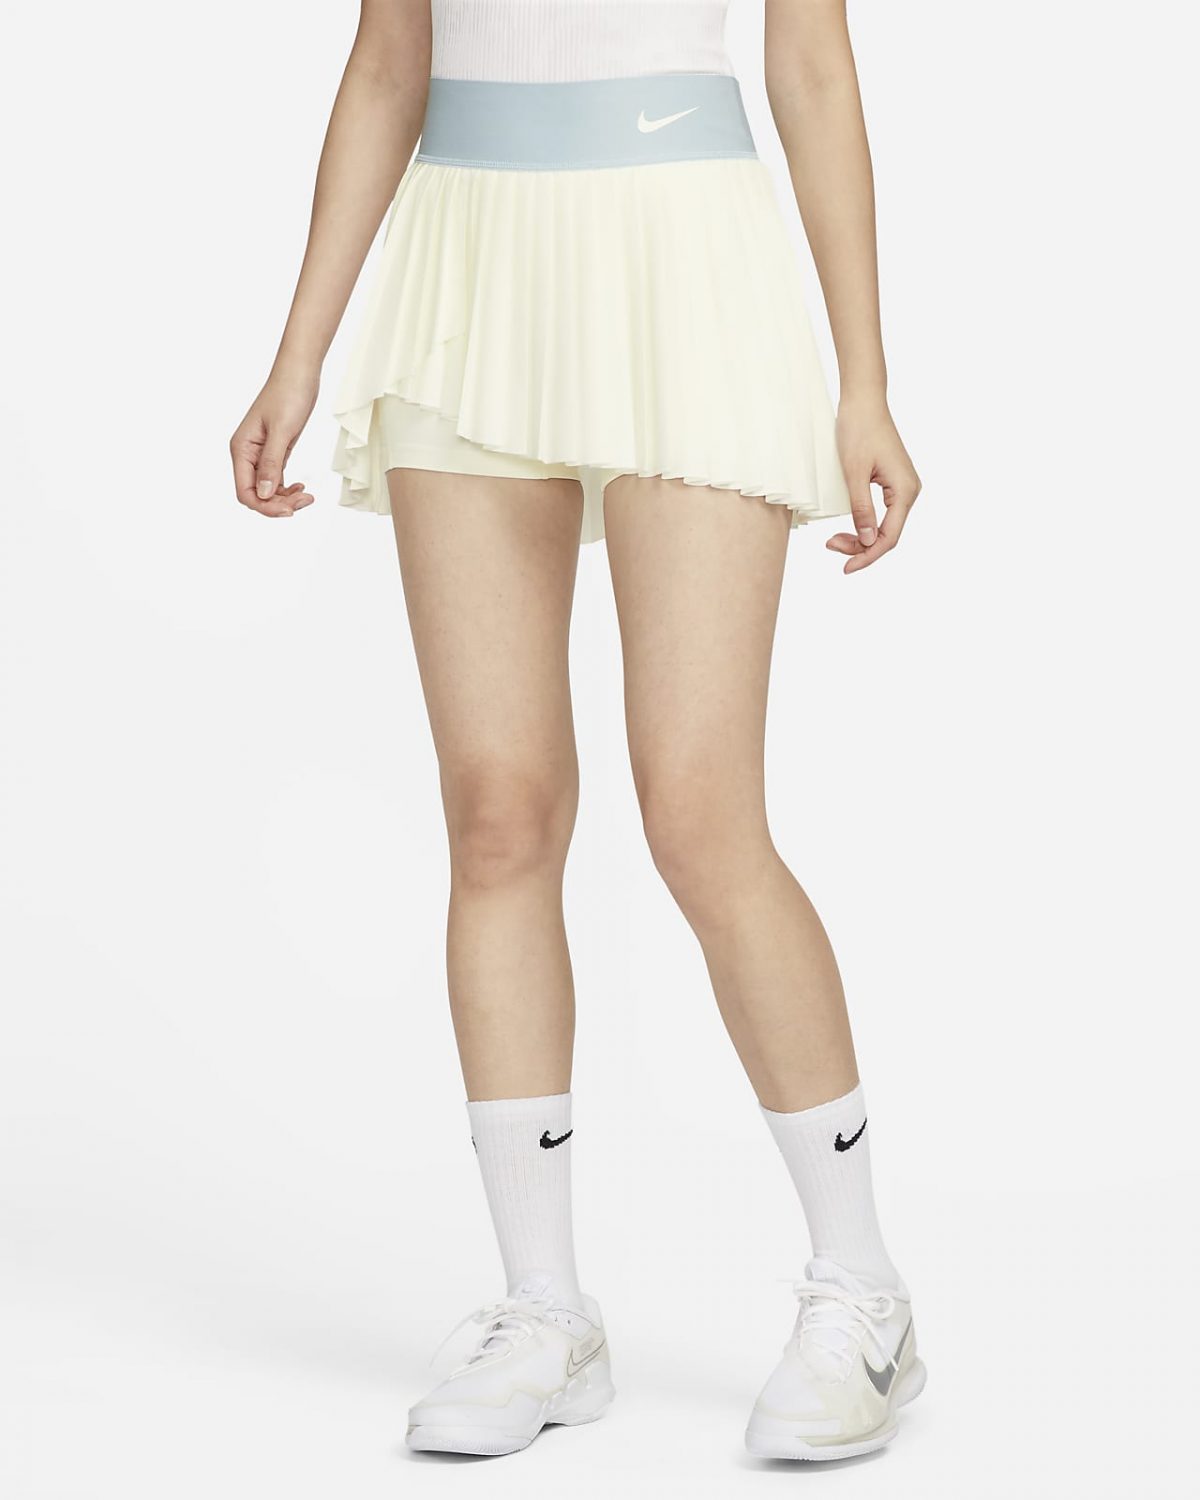 Женская юбка NikeCourt Advantage синяя фото